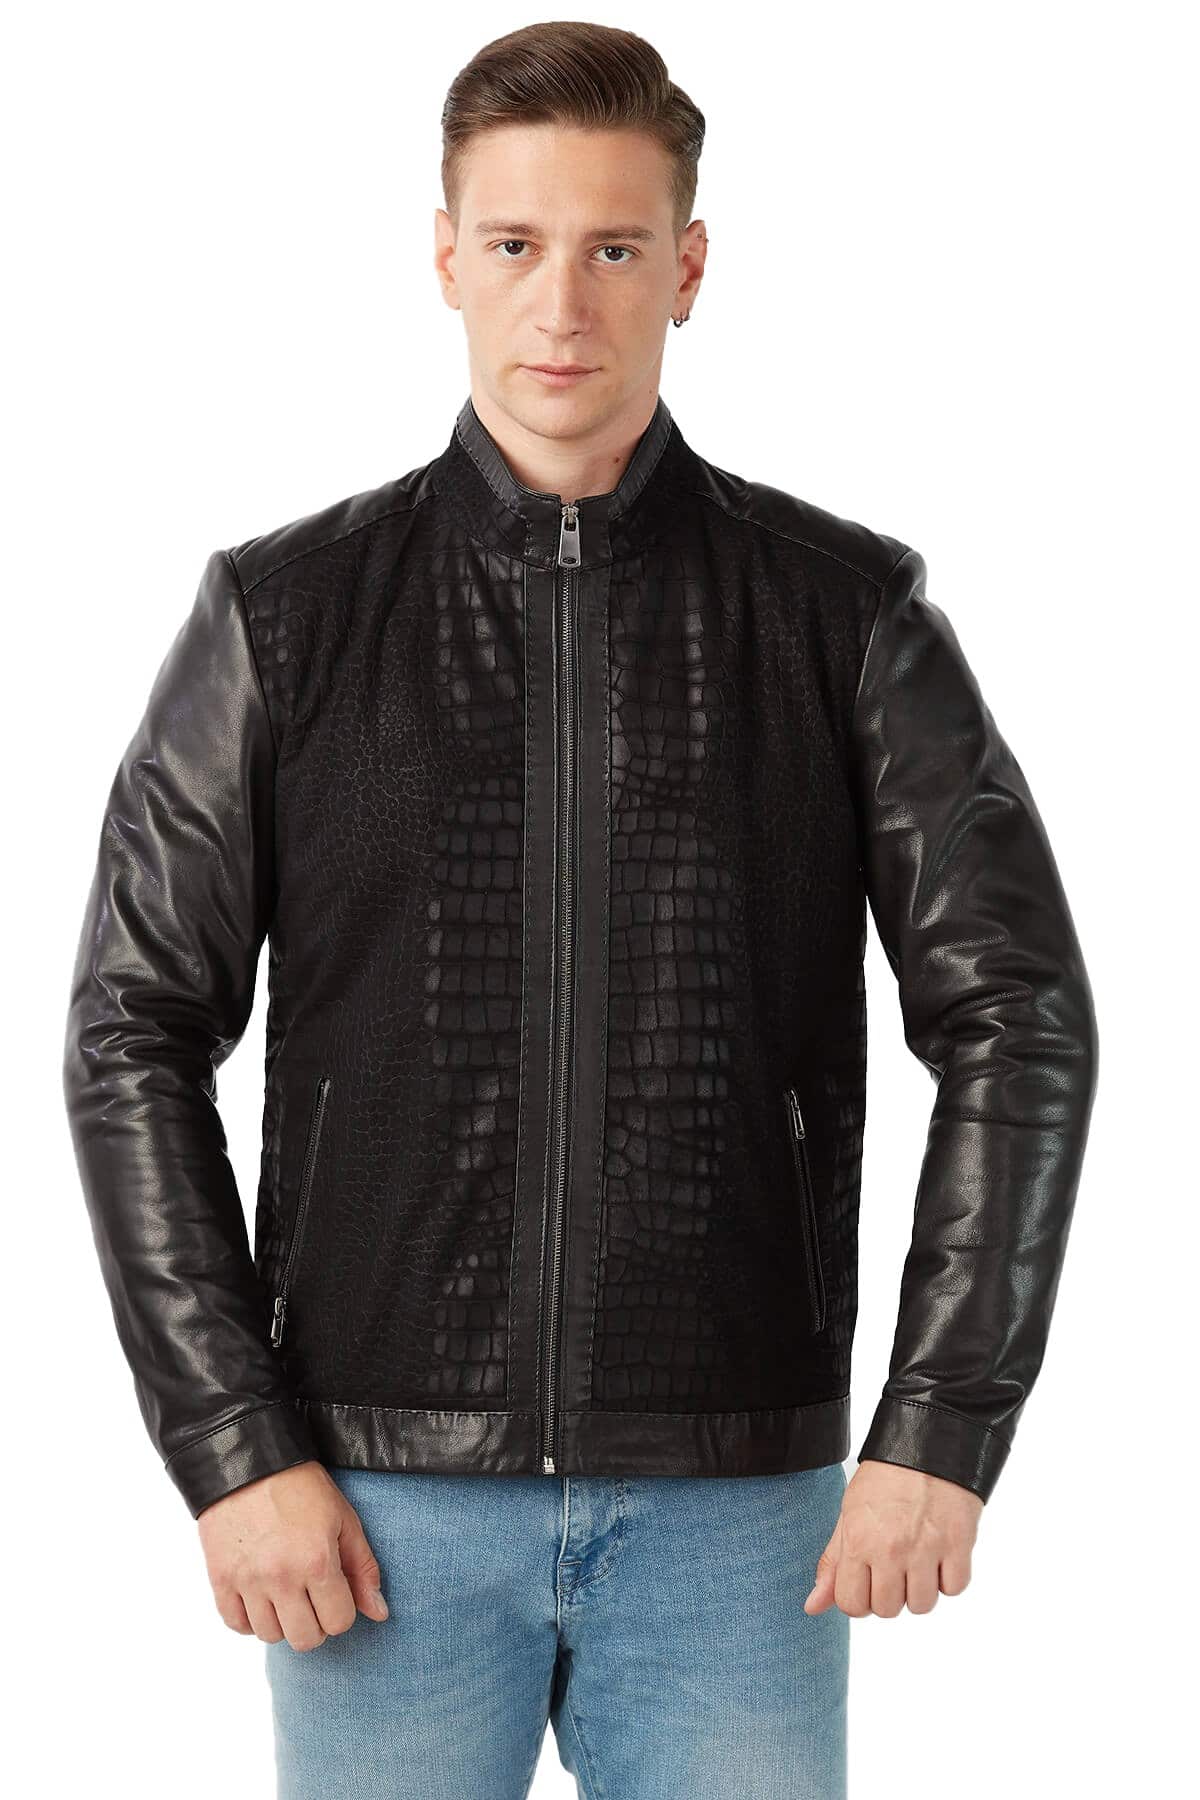 Men's 100 % Real Black Leather Crocodile Printed Suede Jacket